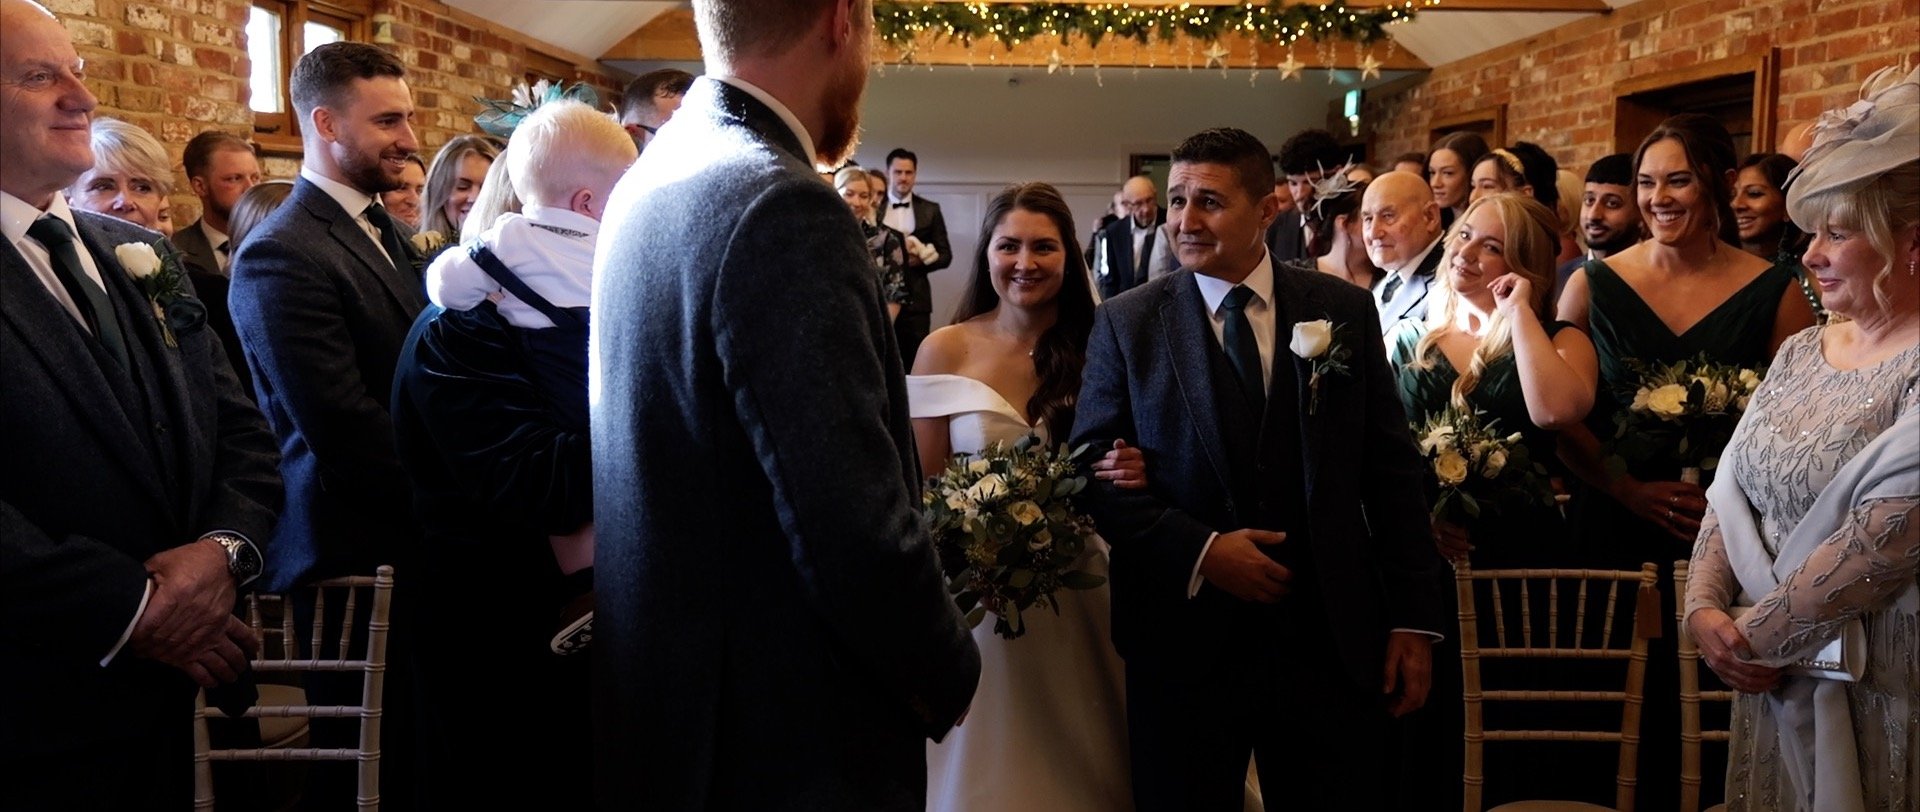 Apton Hall Wedding Videography - 3 Cheers Media - Here comes the bride.jpg